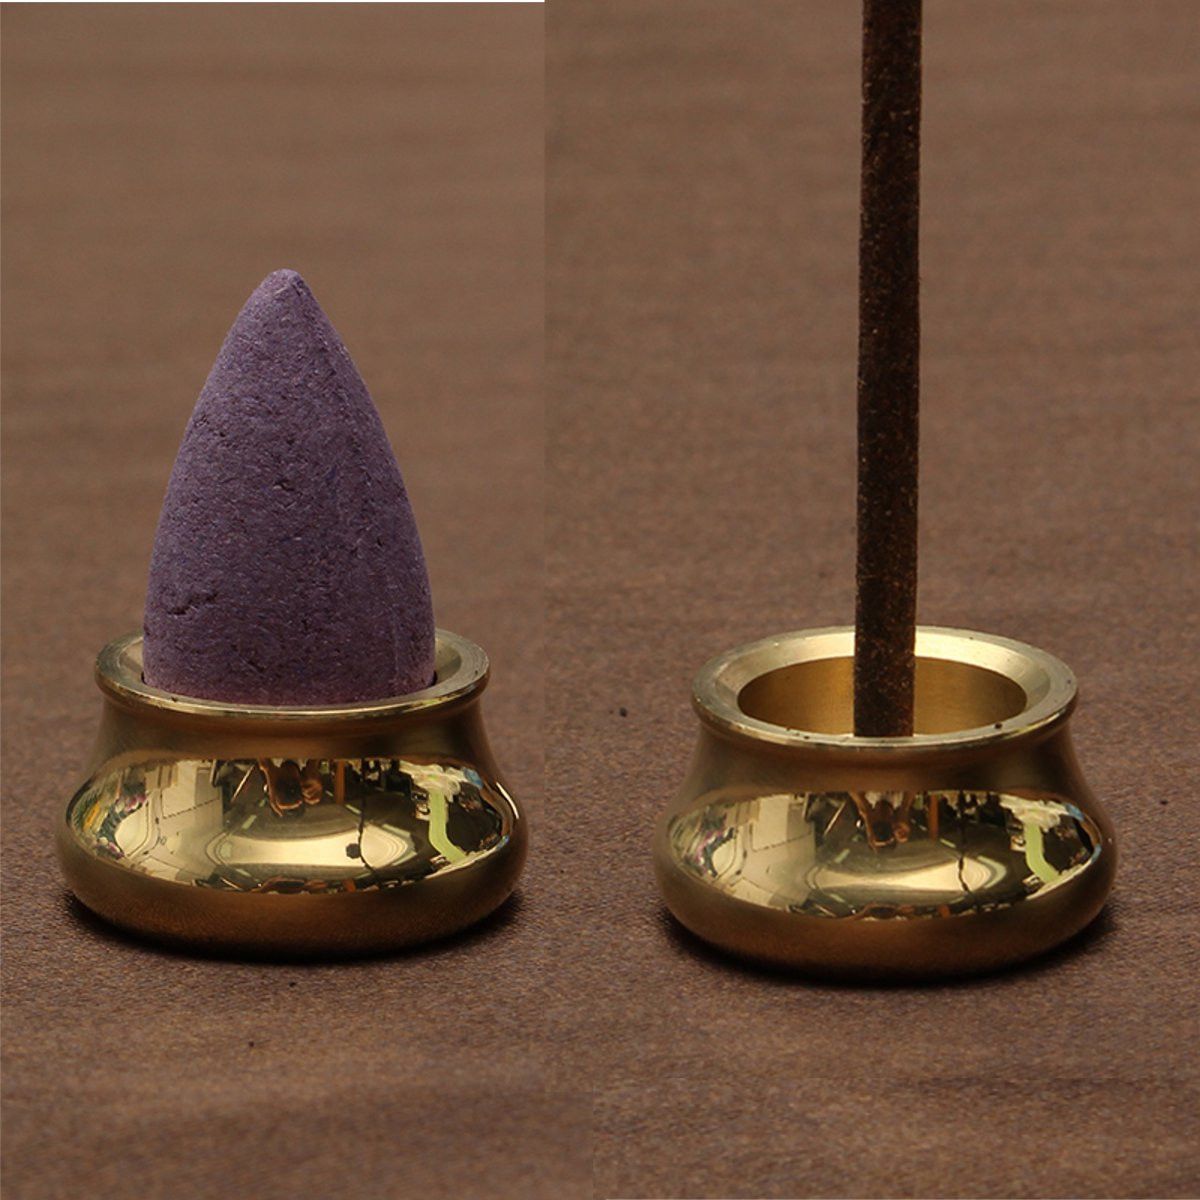 Dual-purpose-Mini-Copper-Incense-Cone-Stick-Burner-Holder-Plate-Censer-Tower-Bowl-Meditation-Decor-1141321